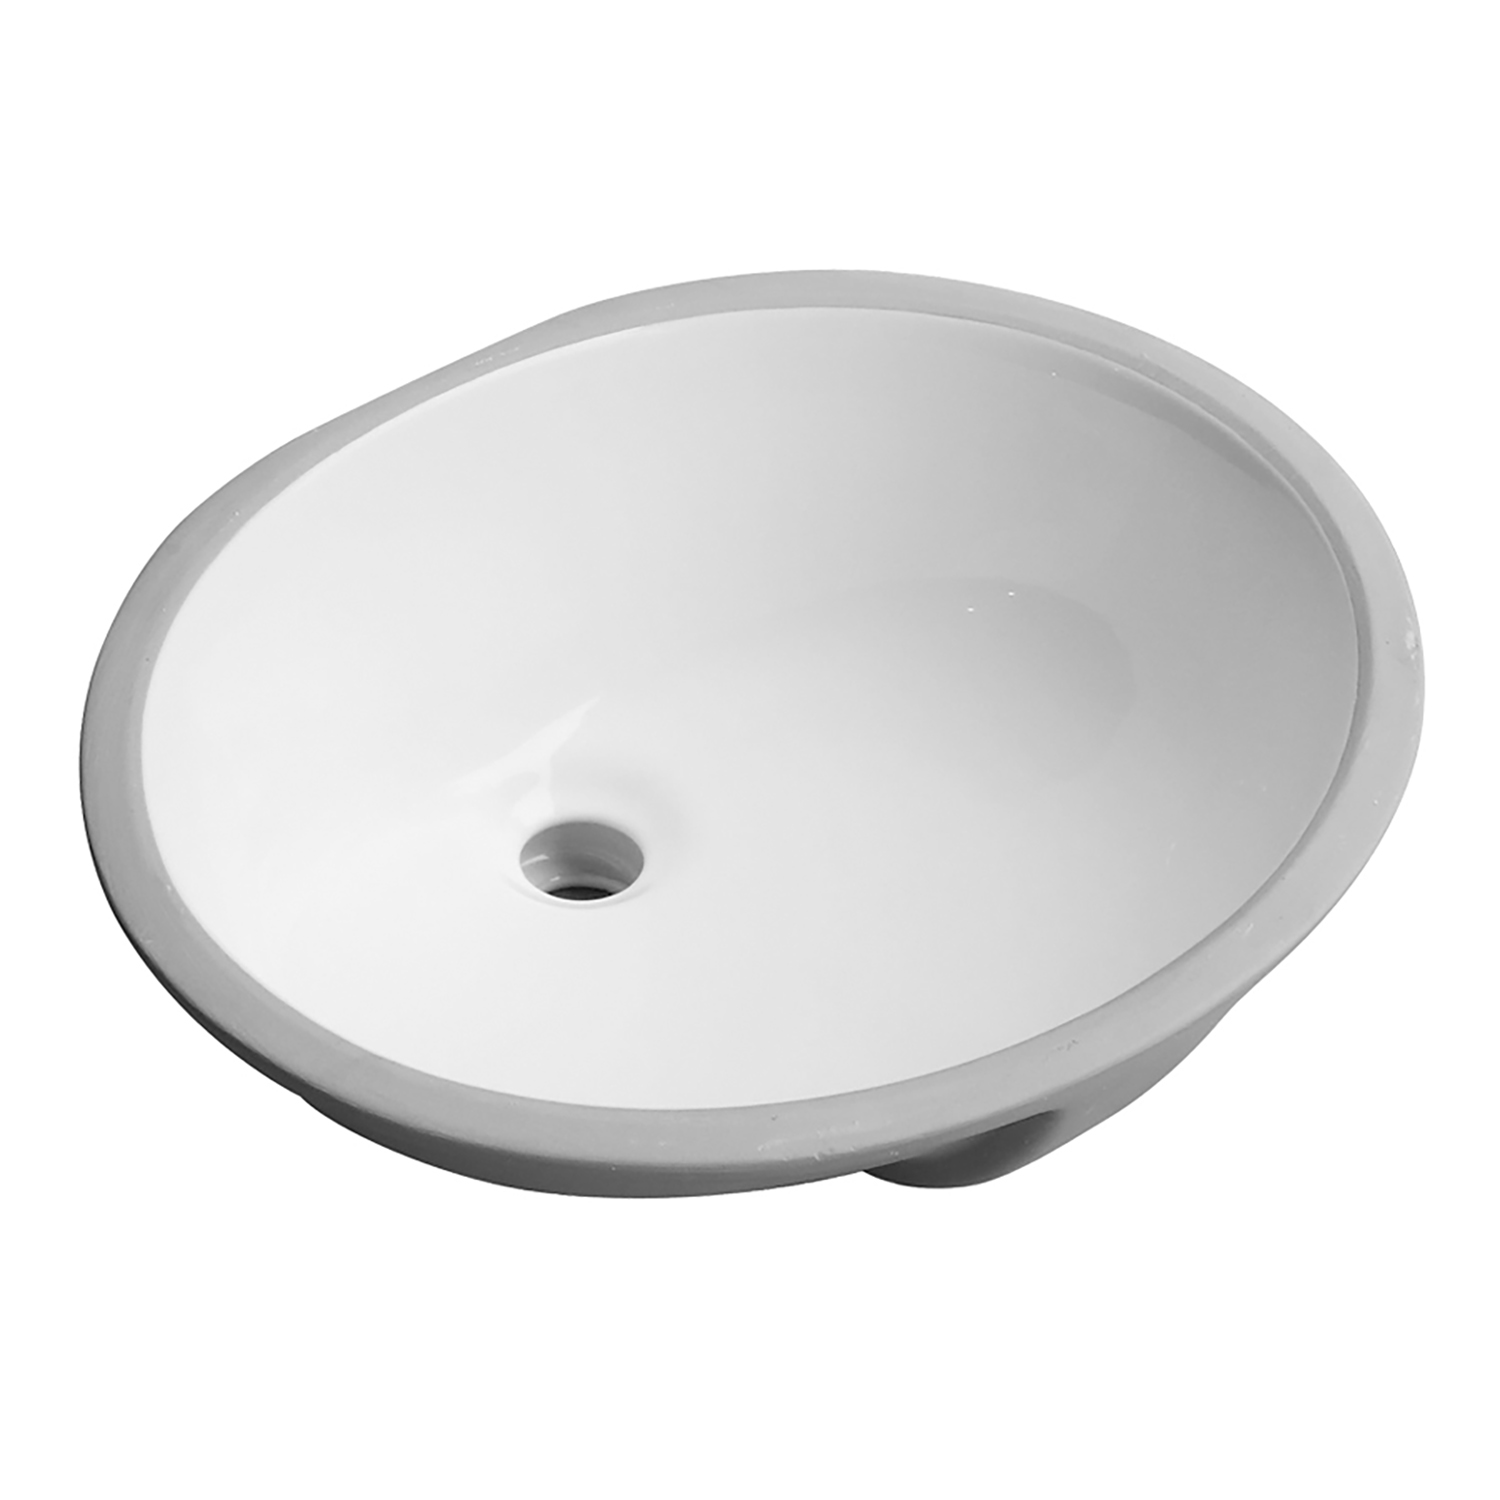 C4020 19" x 16" White Oval Ceramic Bathroom Vanity Undermount Sink